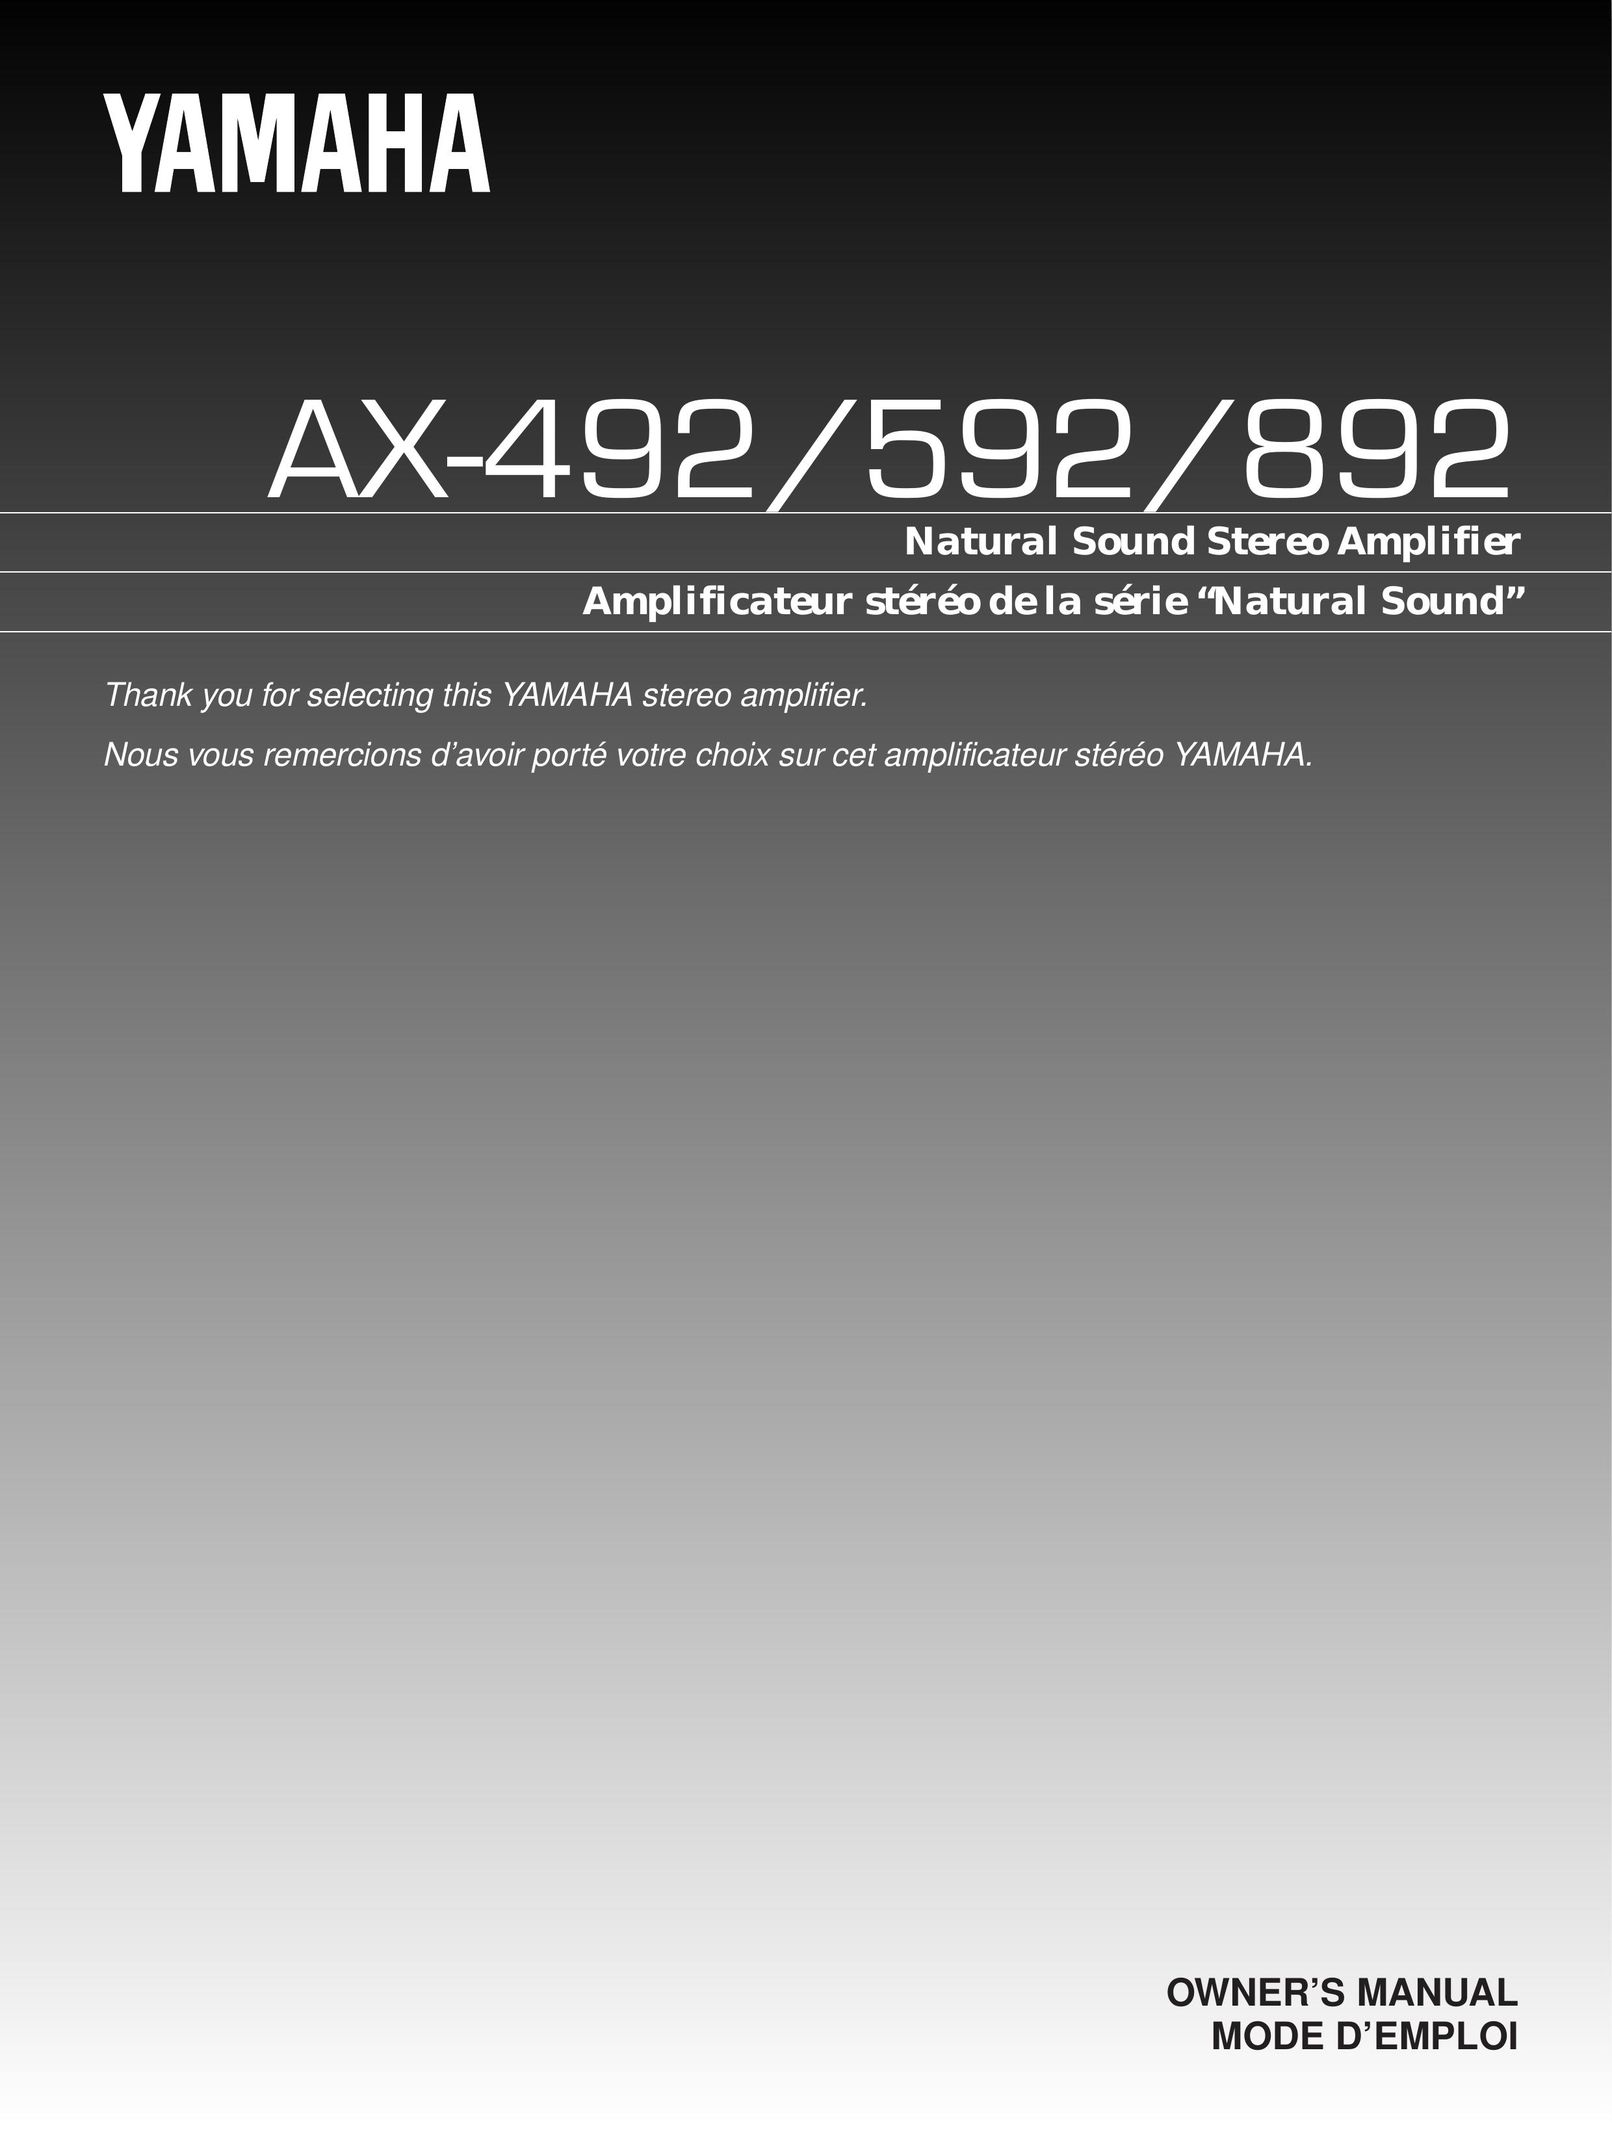 Yamaha AX-892 Stereo Amplifier User Manual